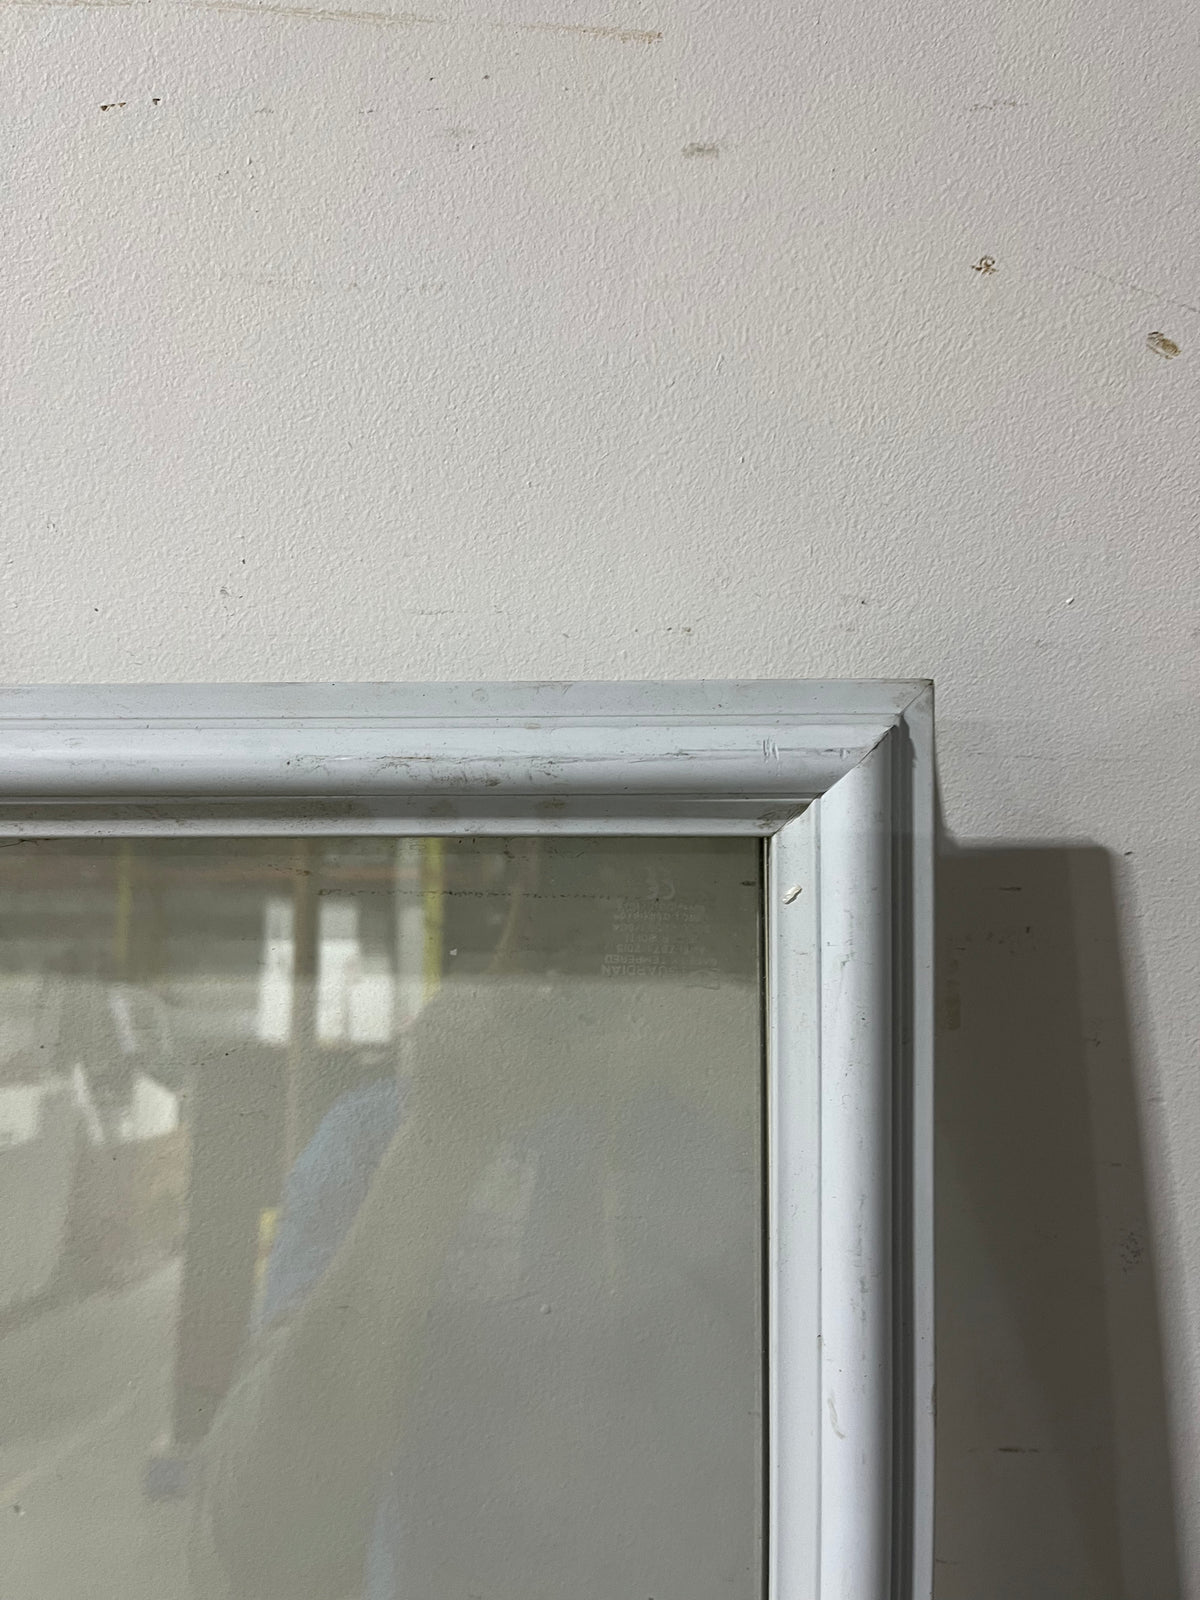 22" x 66" Fixed Window